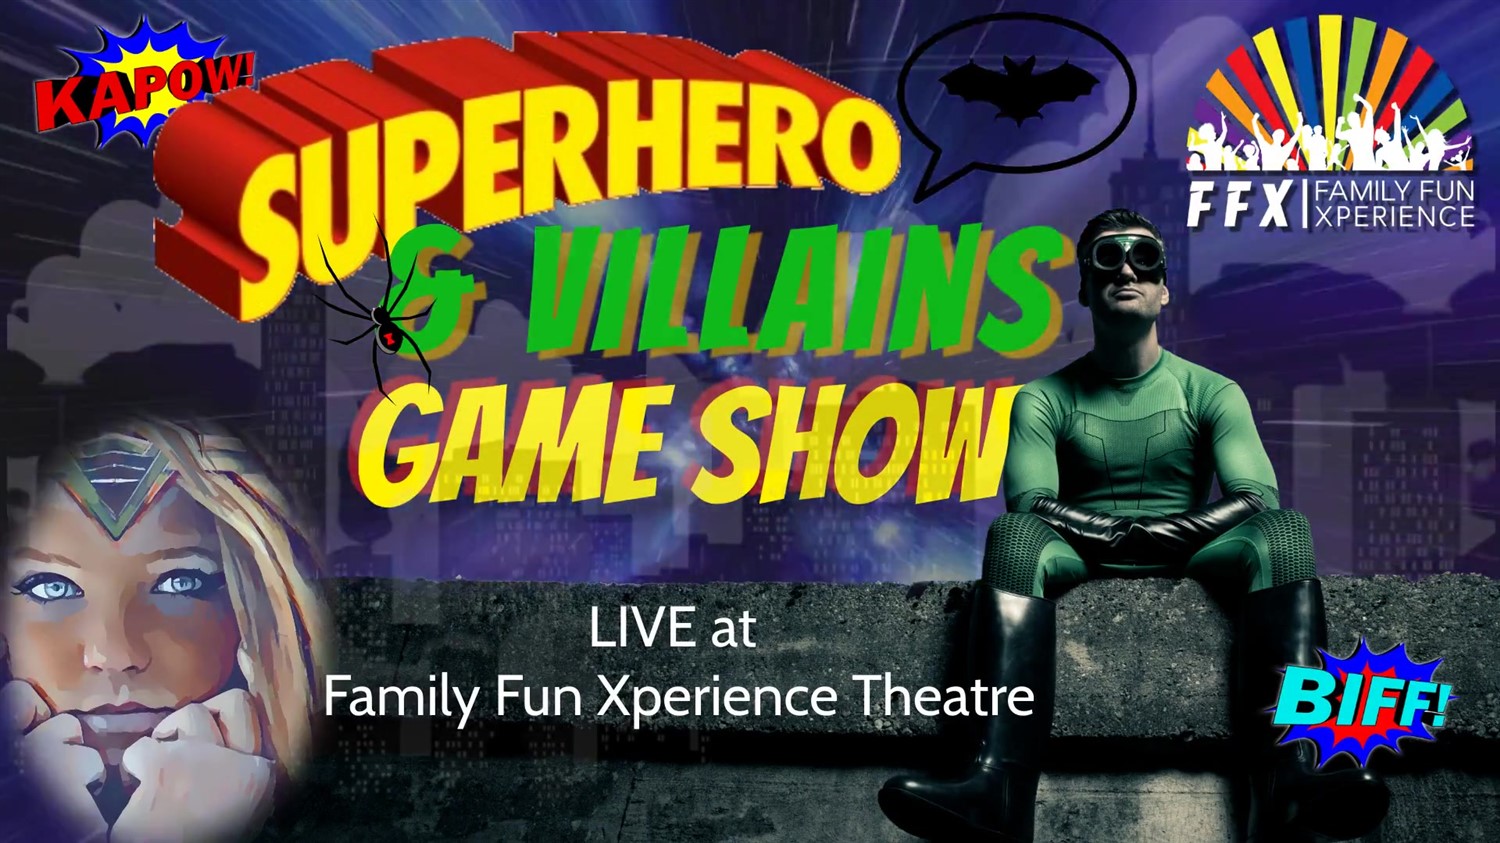 SUPERHEROES & VILLAINS Live Game Show with Super-charged Fun for Everyone! on sep. 28, 19:00@FFX Theatre - Elegir asientoCompra entradas y obtén información enFamily Fun Xperience tickets.ffxshow.org